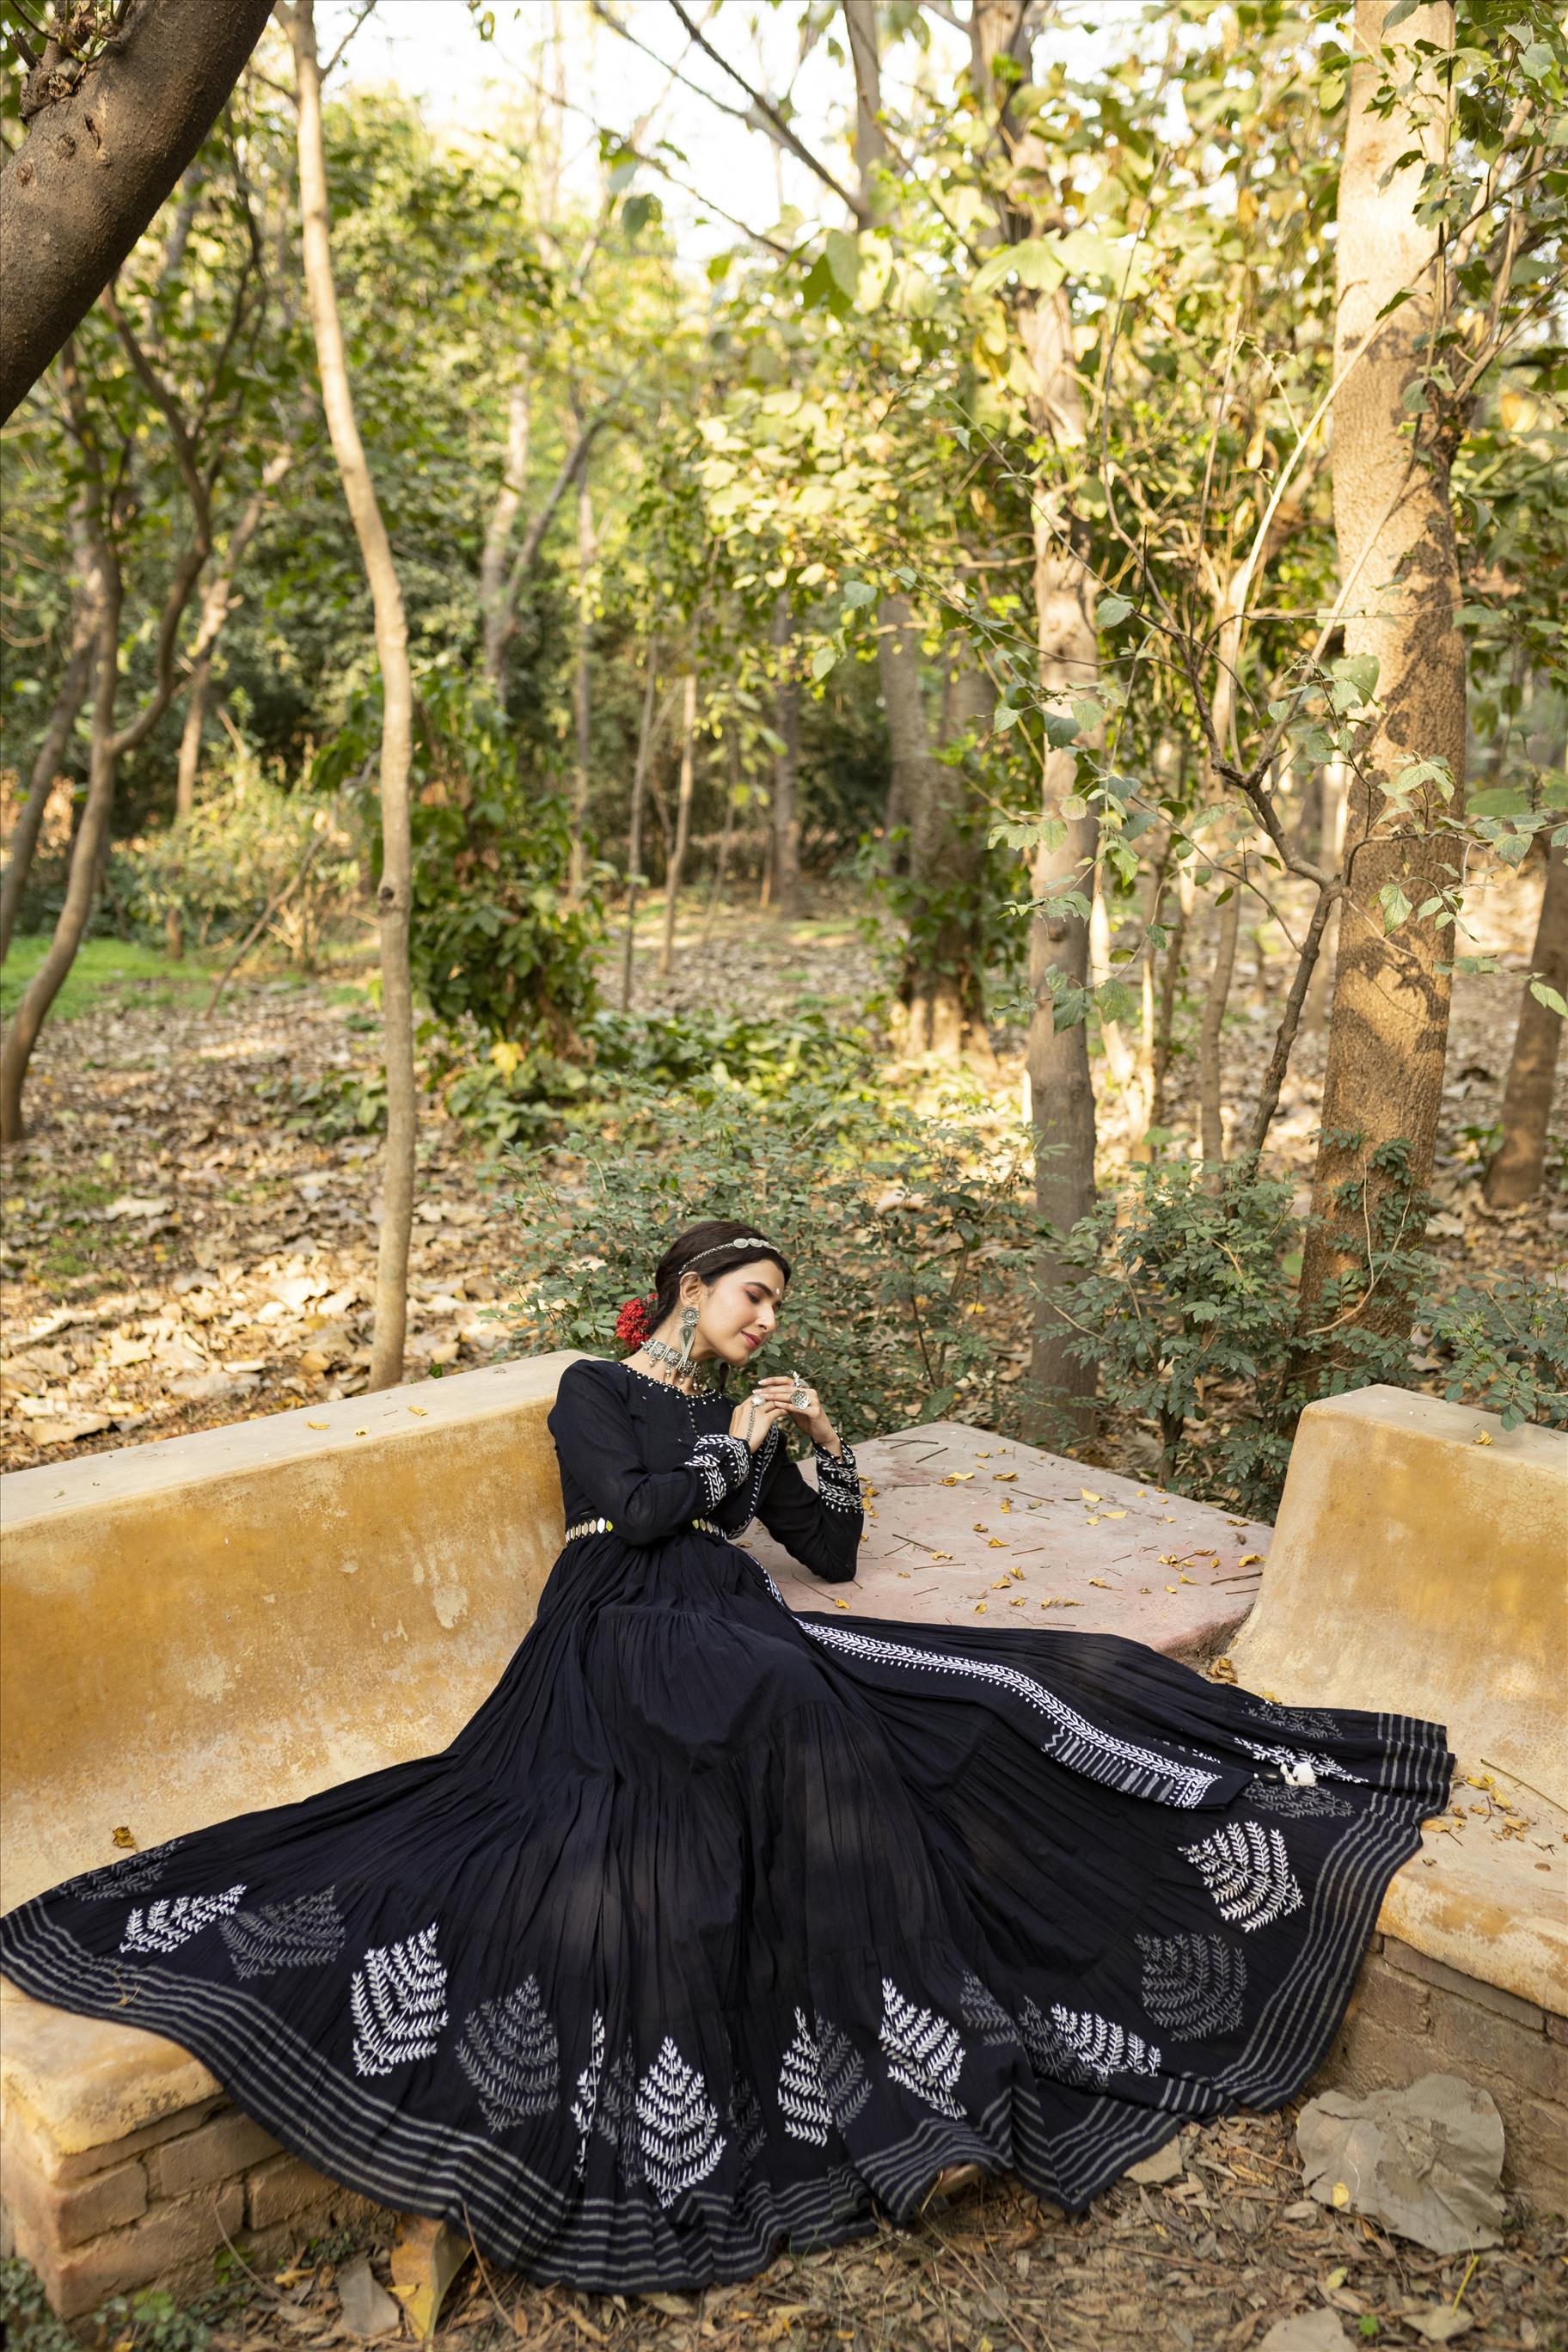 Black Cotton Kutch Emboridery Anarkali Dress With Dupatta And Mirror Work Belt